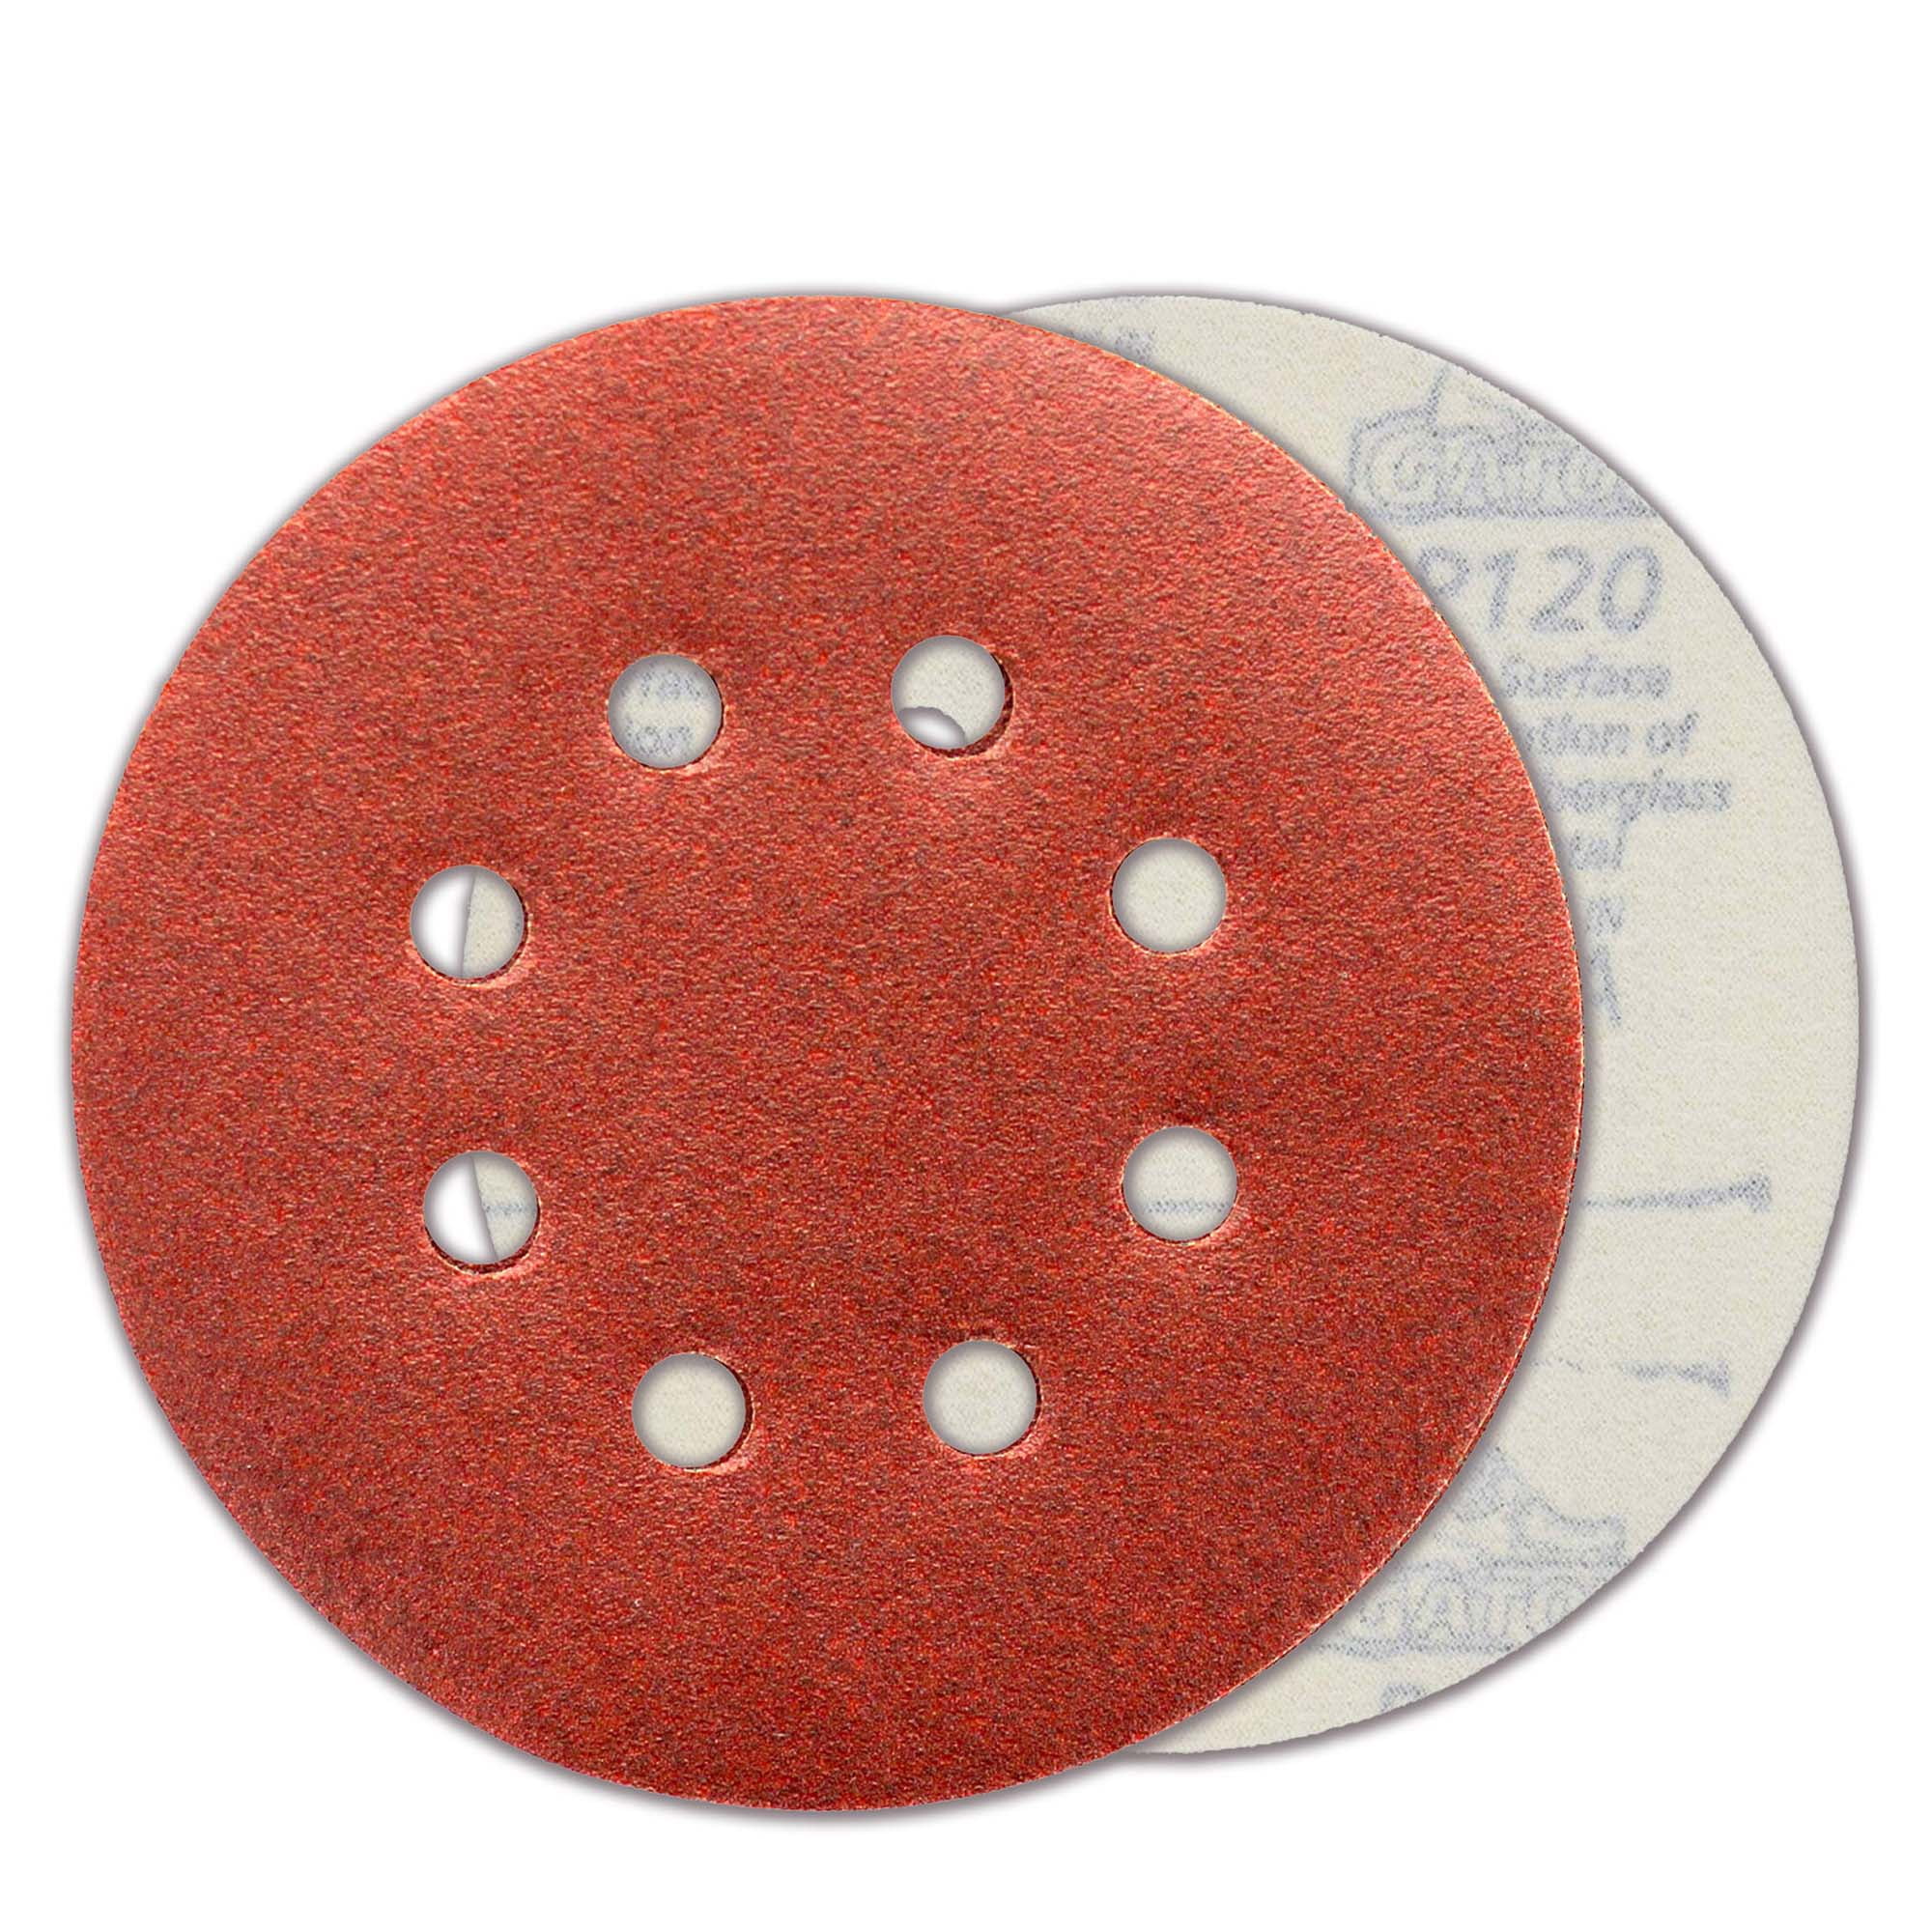 50 Pack Sandpaper 7-inch 120 Grits Hook and Loop Sanding Discs Aluminum Oxide